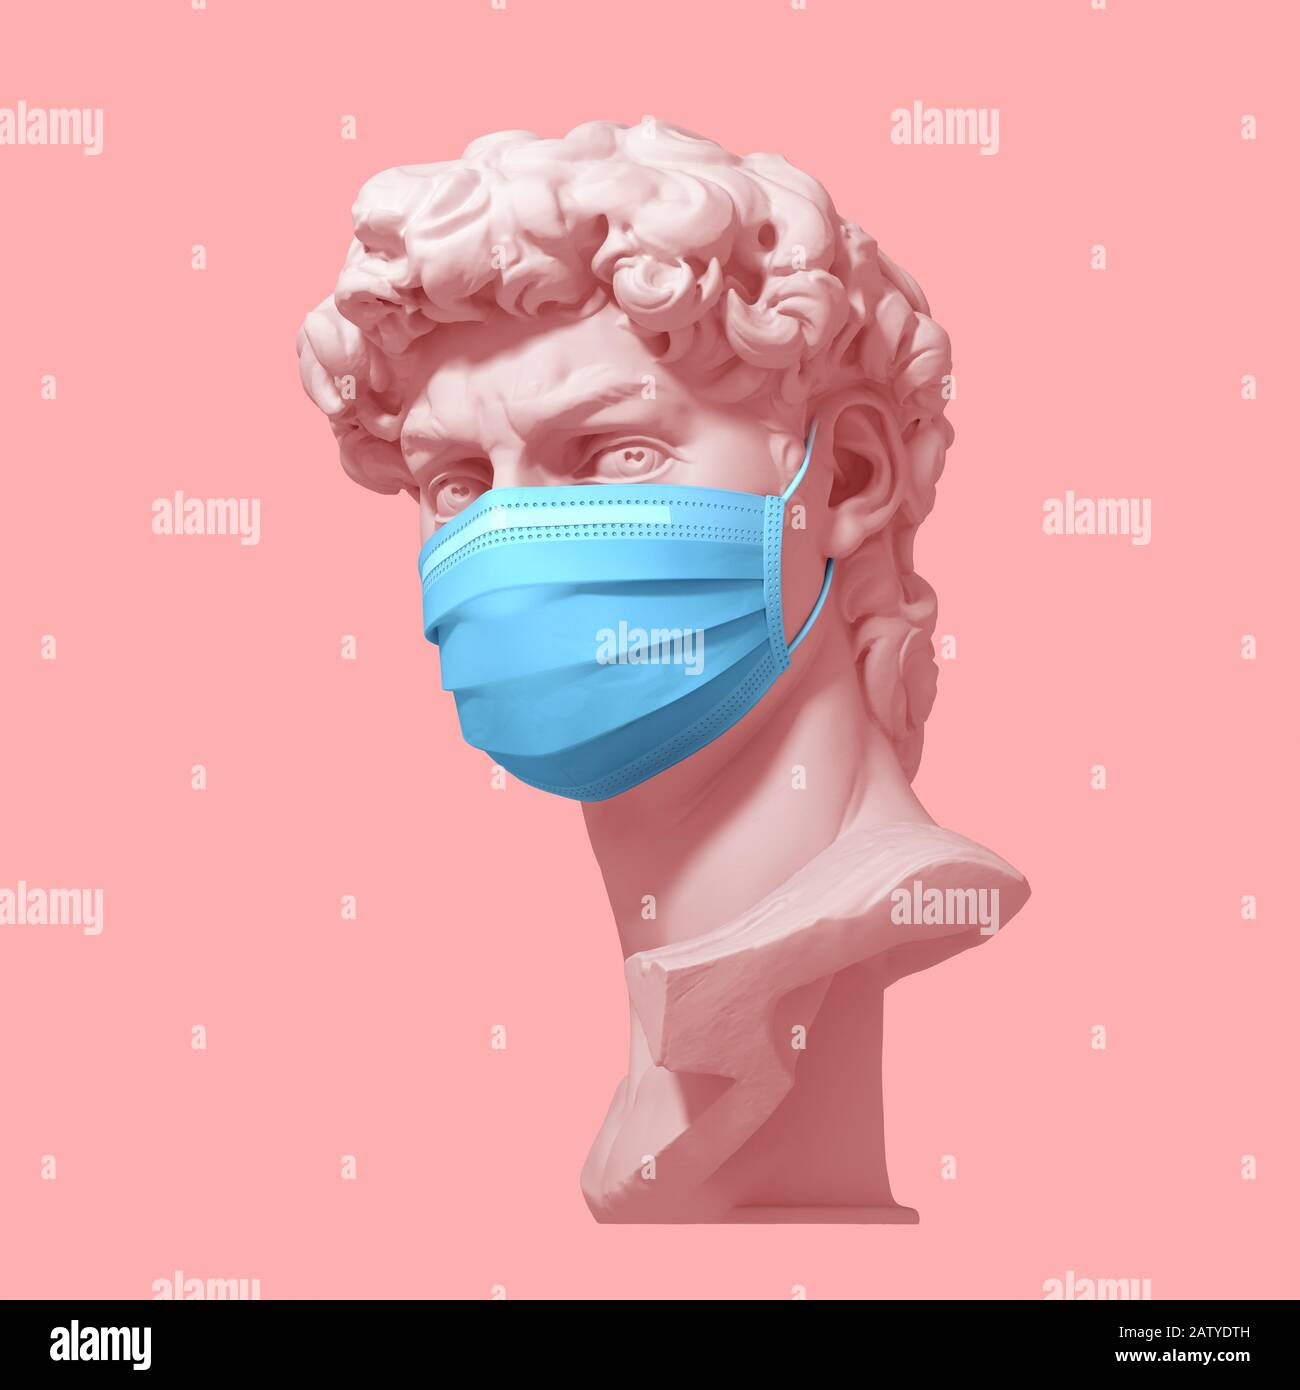 Head Of David In Medical Mask On Pink Background. Concept Of Coronavirus Quarantine. Stock Photo